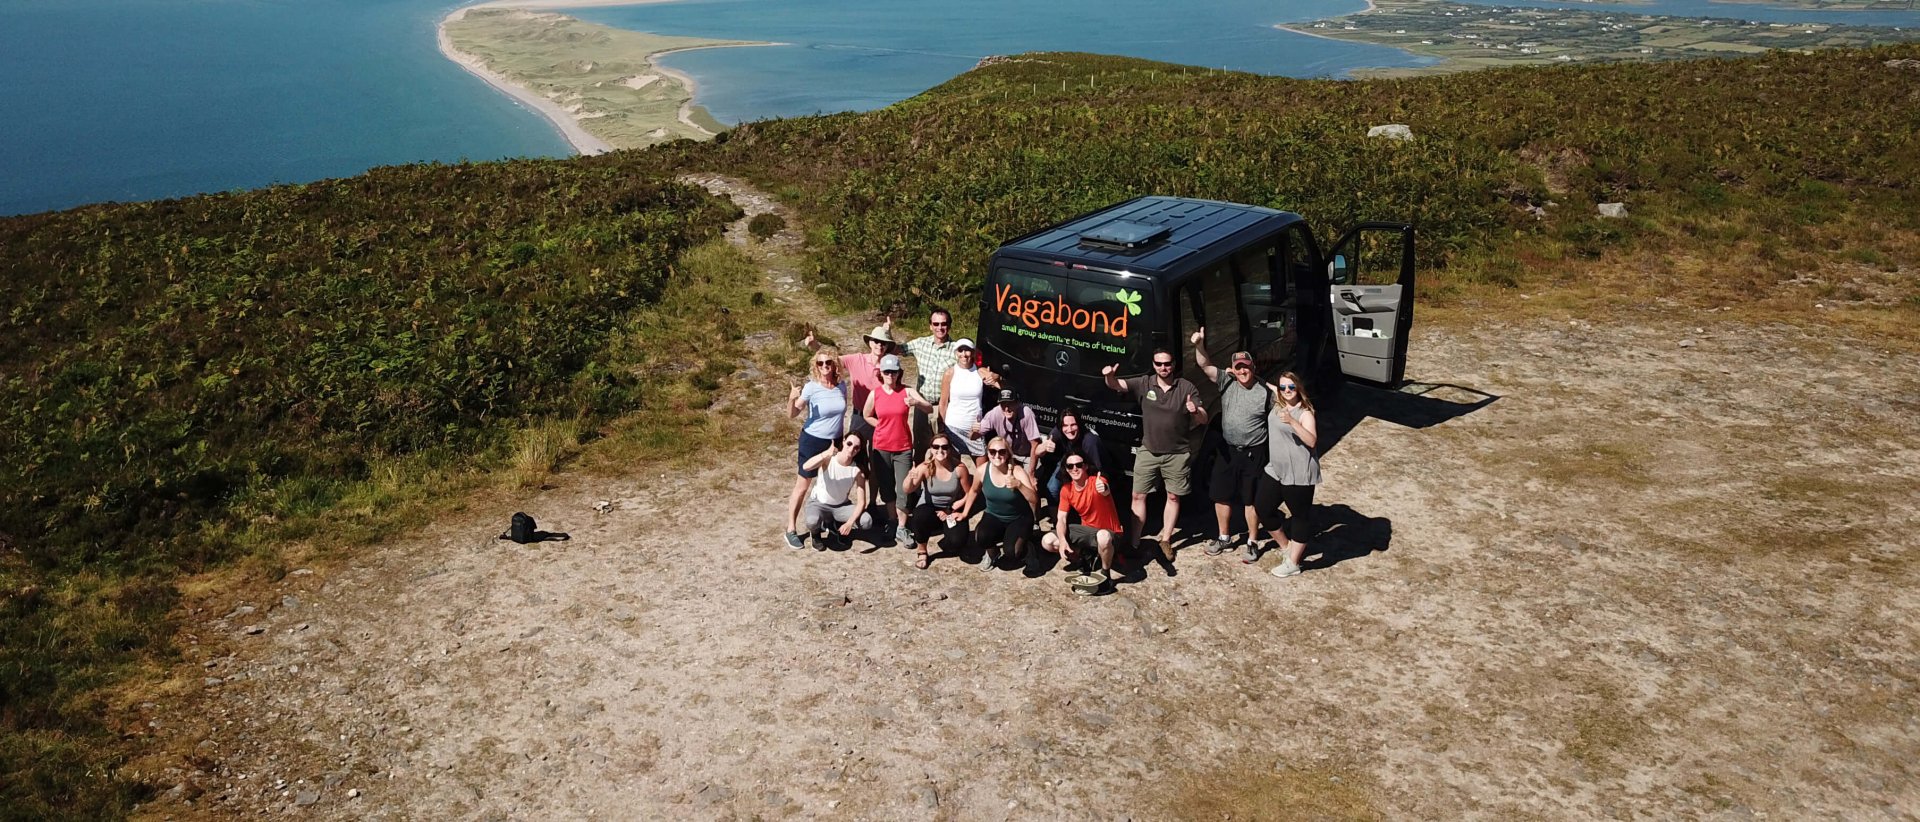 Ireland Tours – Vagabond Small-Group of Ireland